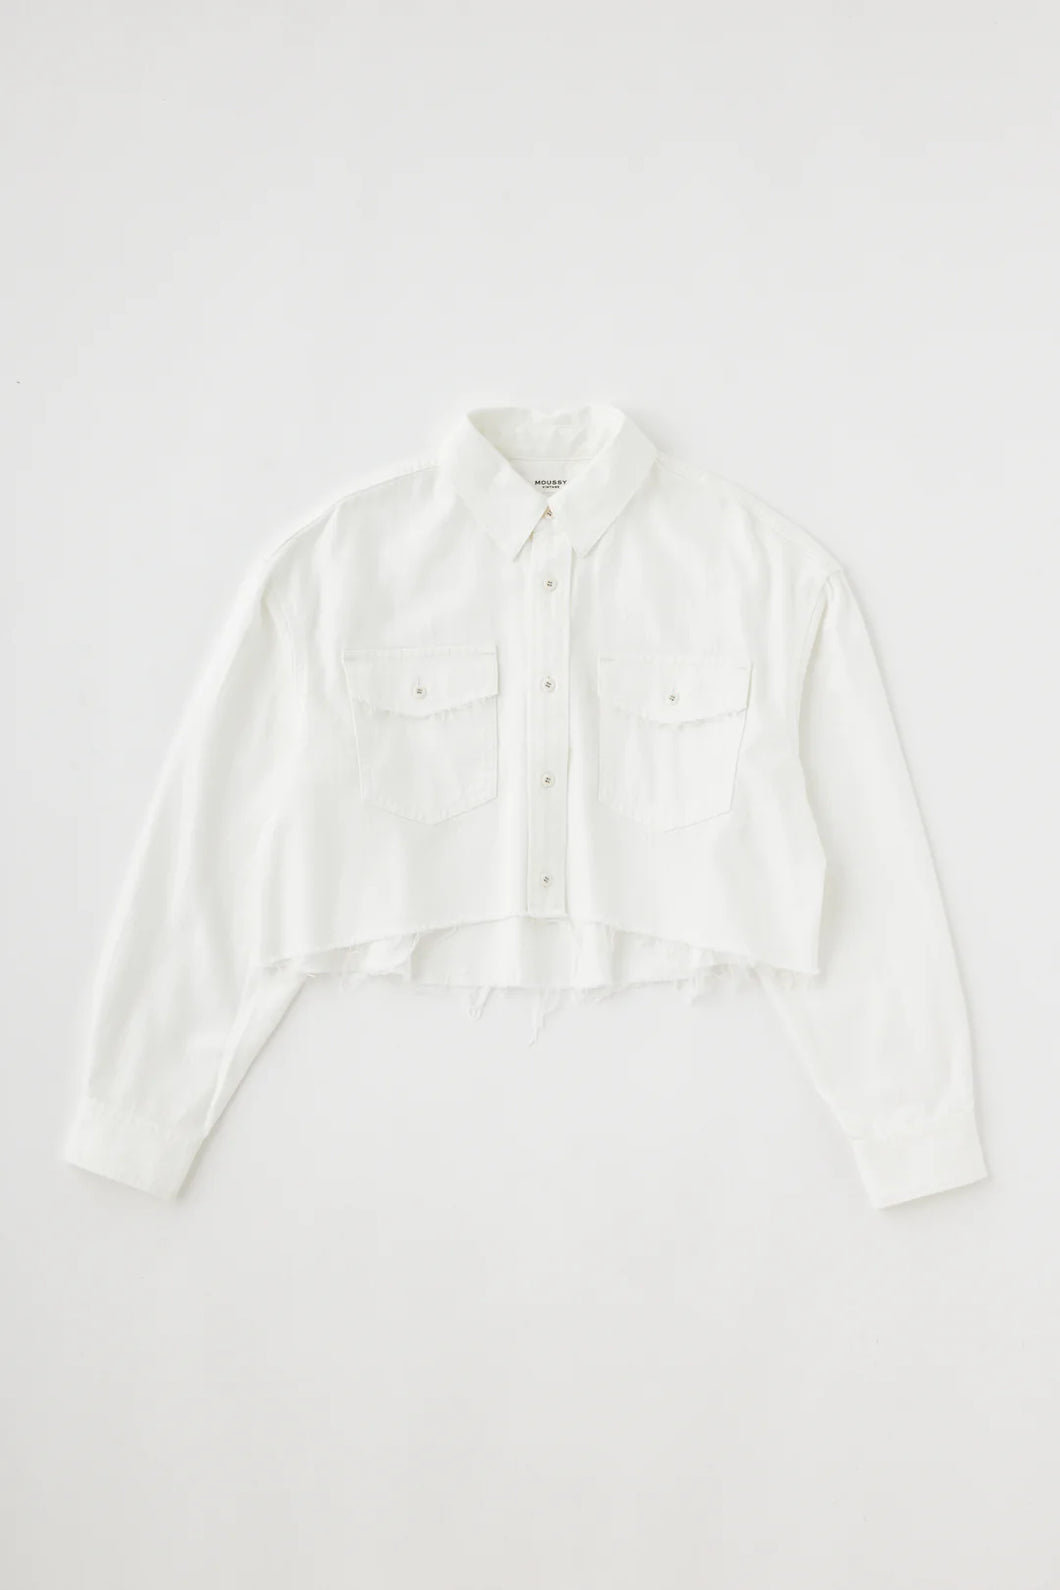 Southfork Cropped Shirt/Jacket